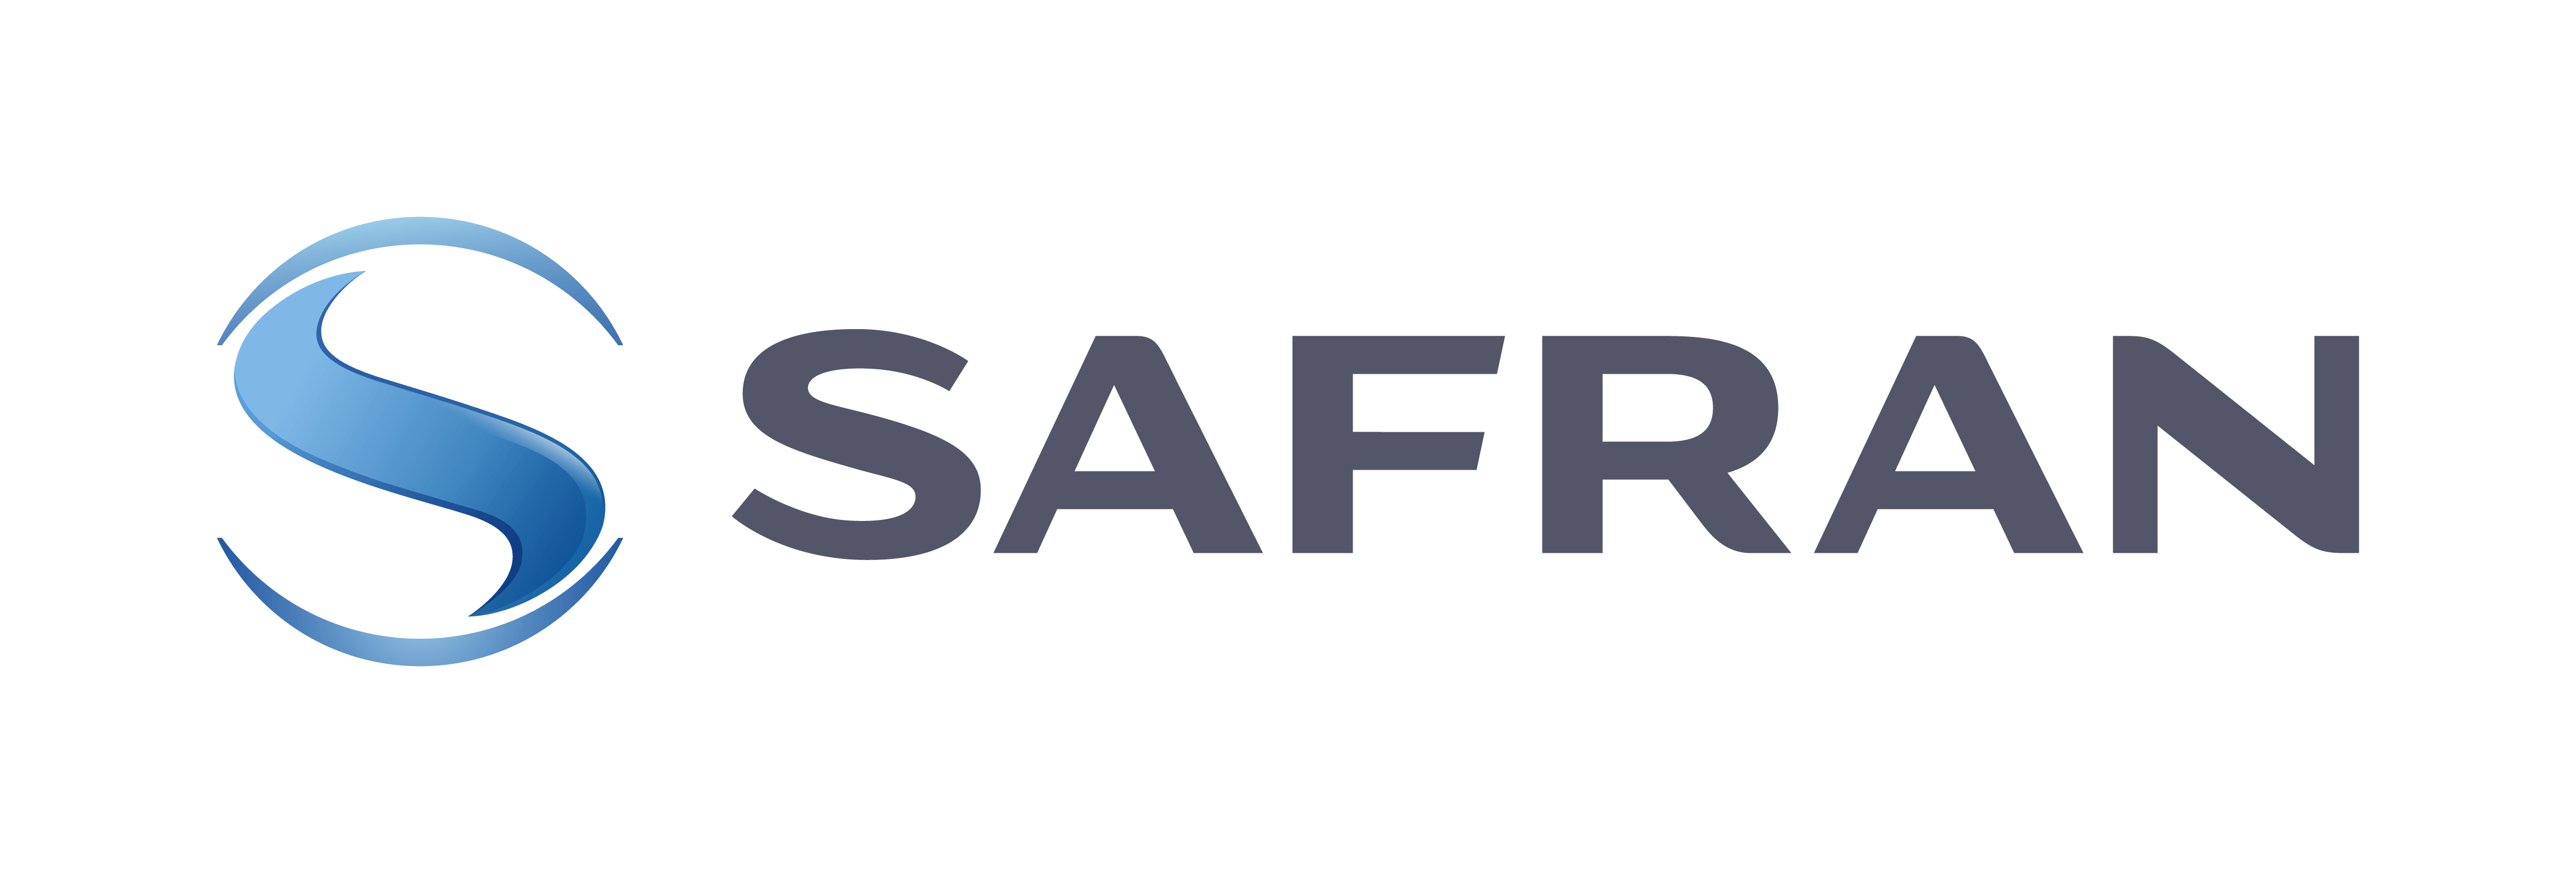 Aircraft Engine Logo - Exhibitor information: Safran Aircraft Engines